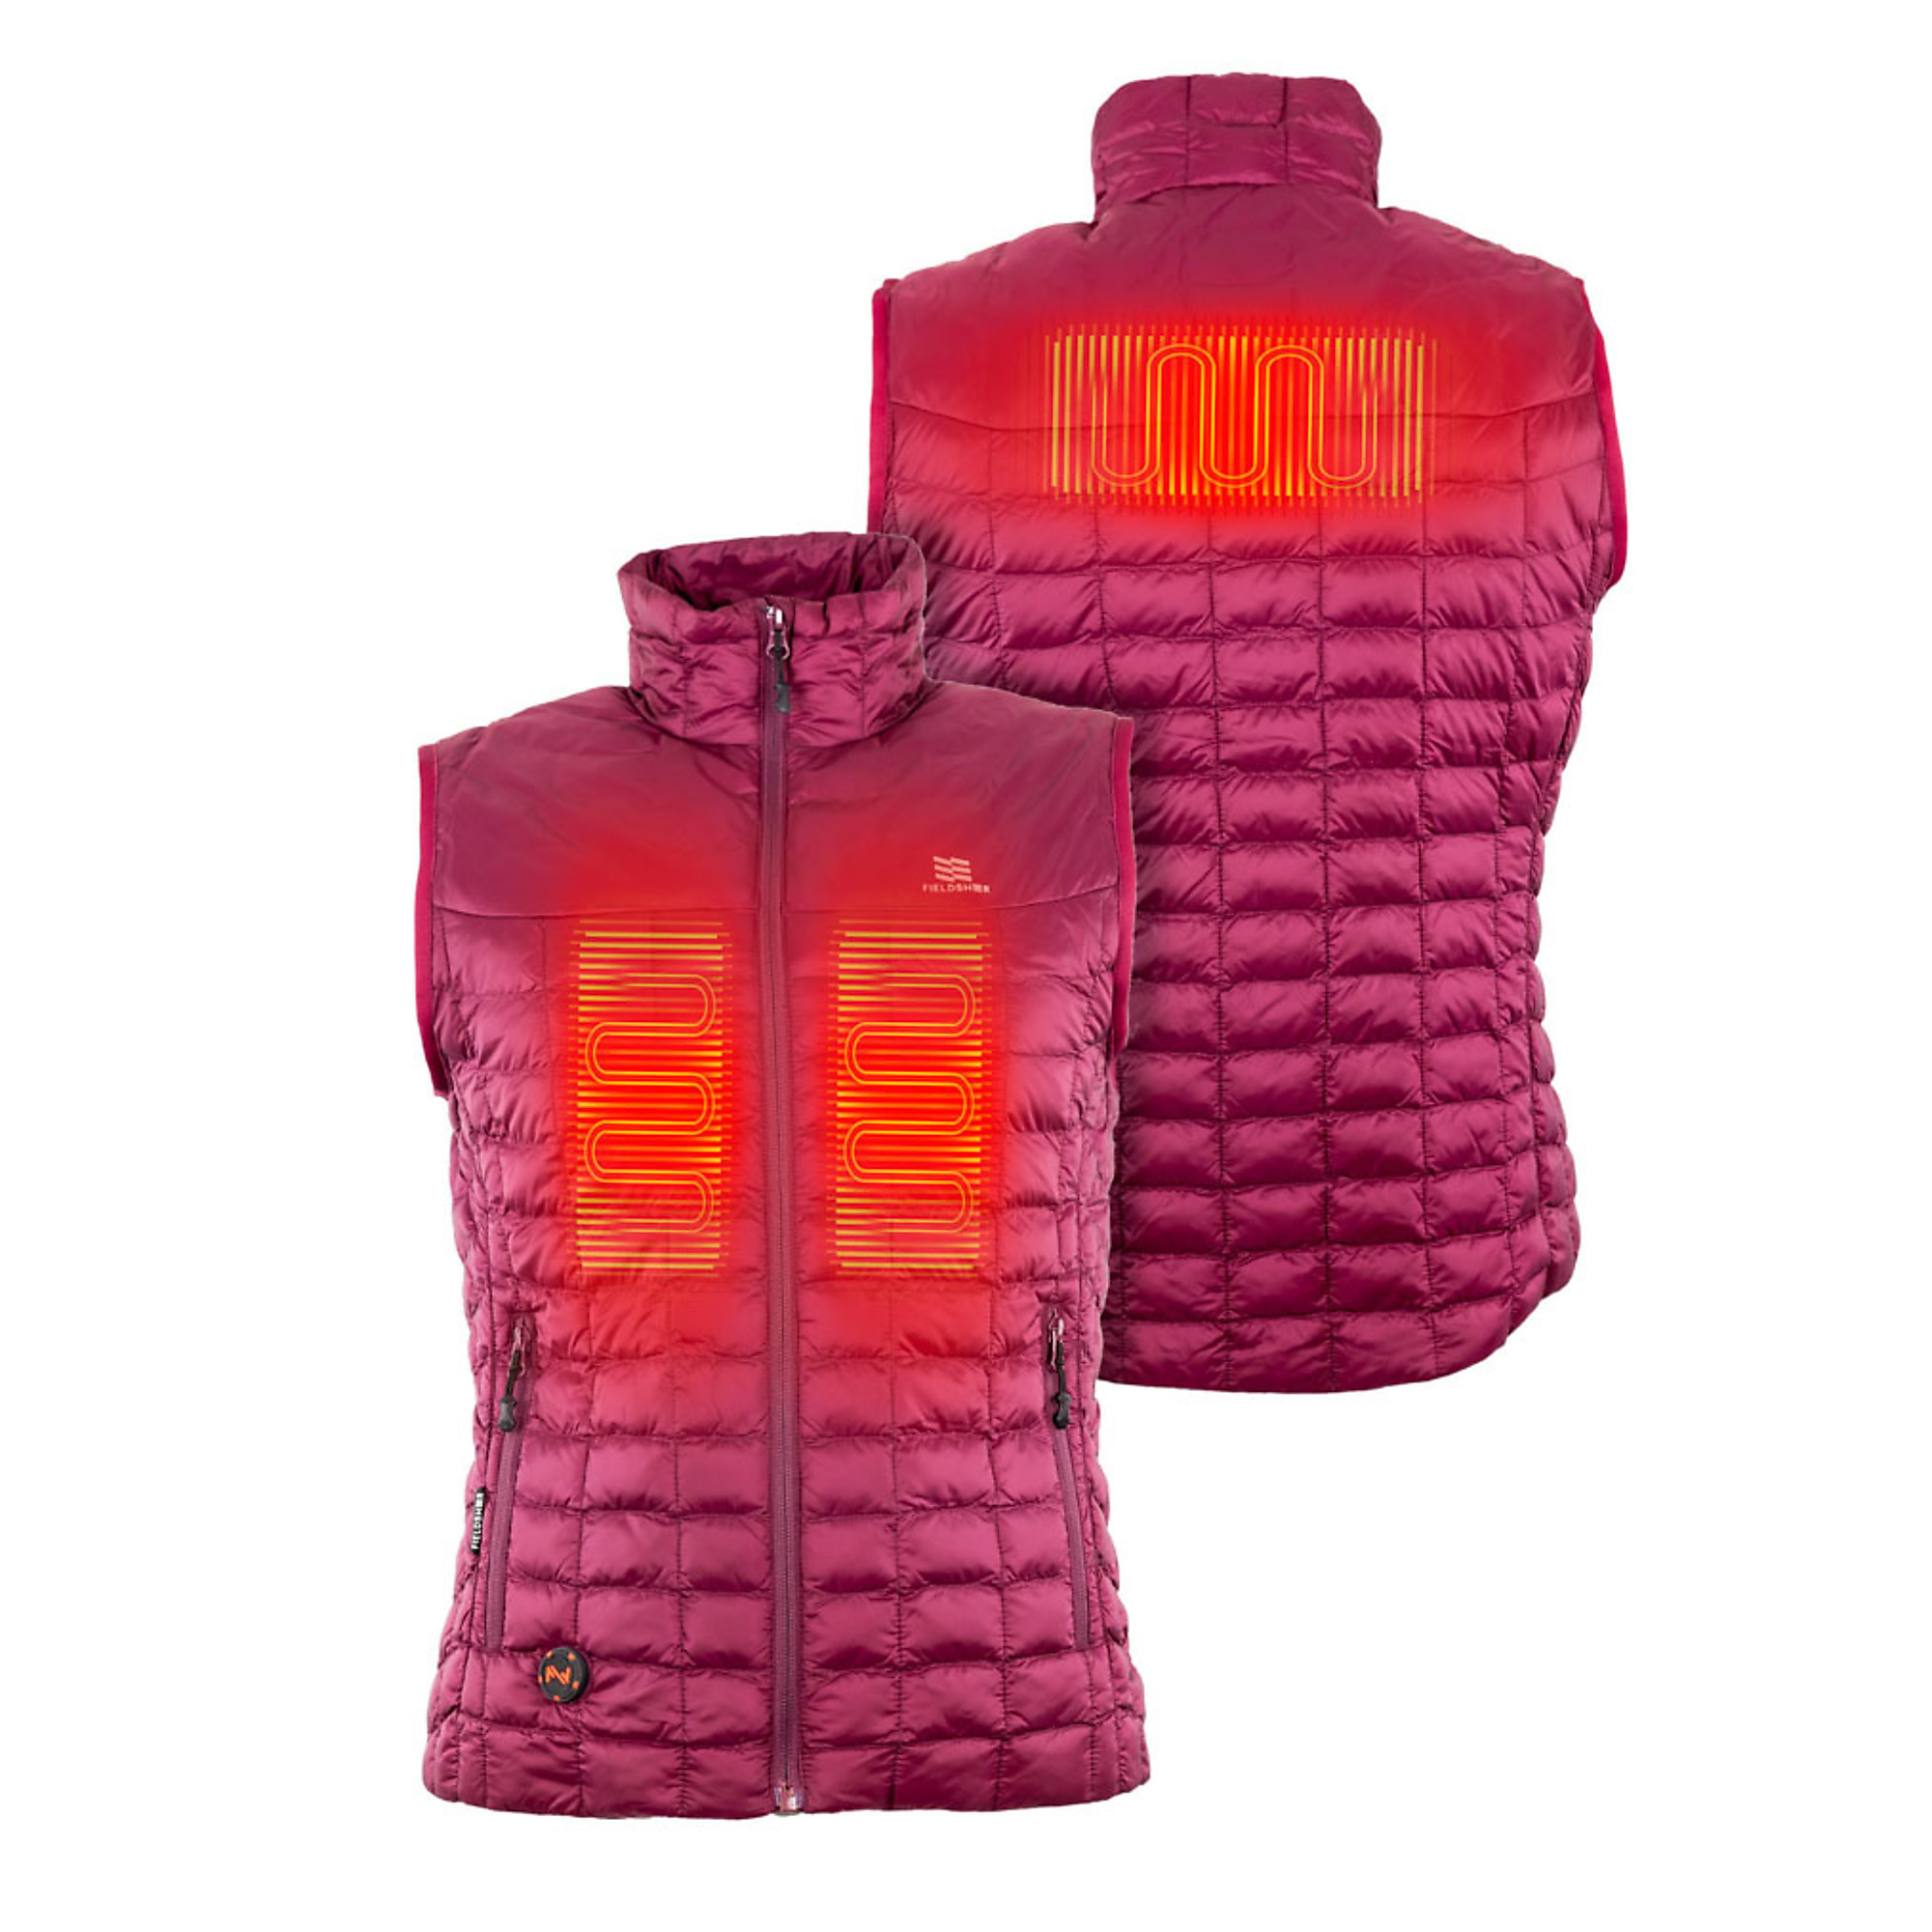 Fieldsheer, Women's 7.4v Backcountry Heated Vest, Size M, Color Red, Model MWWV04310320